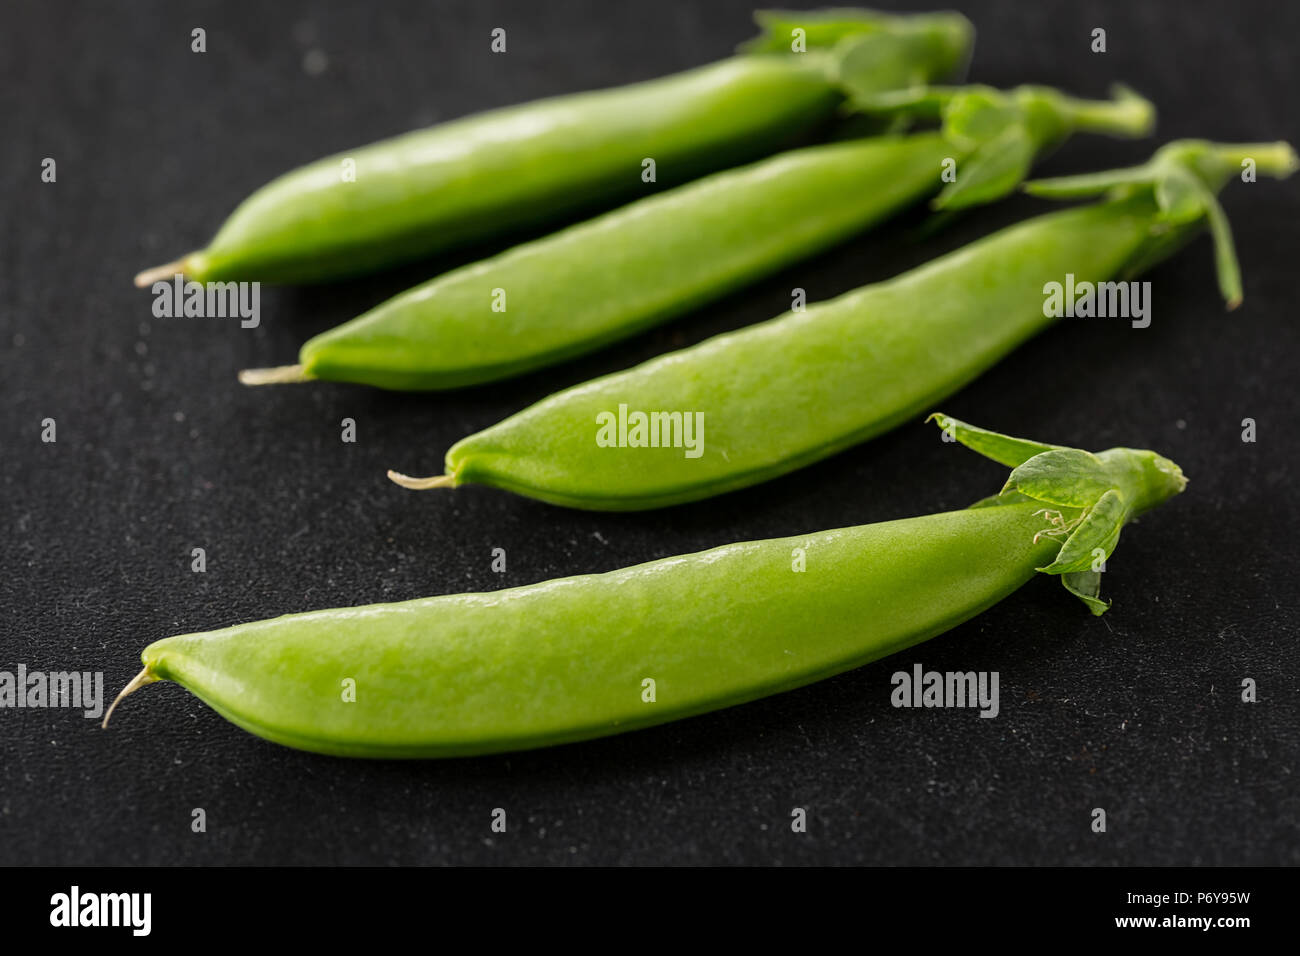 Freshly picked snow peas on a black background. Stock Photo